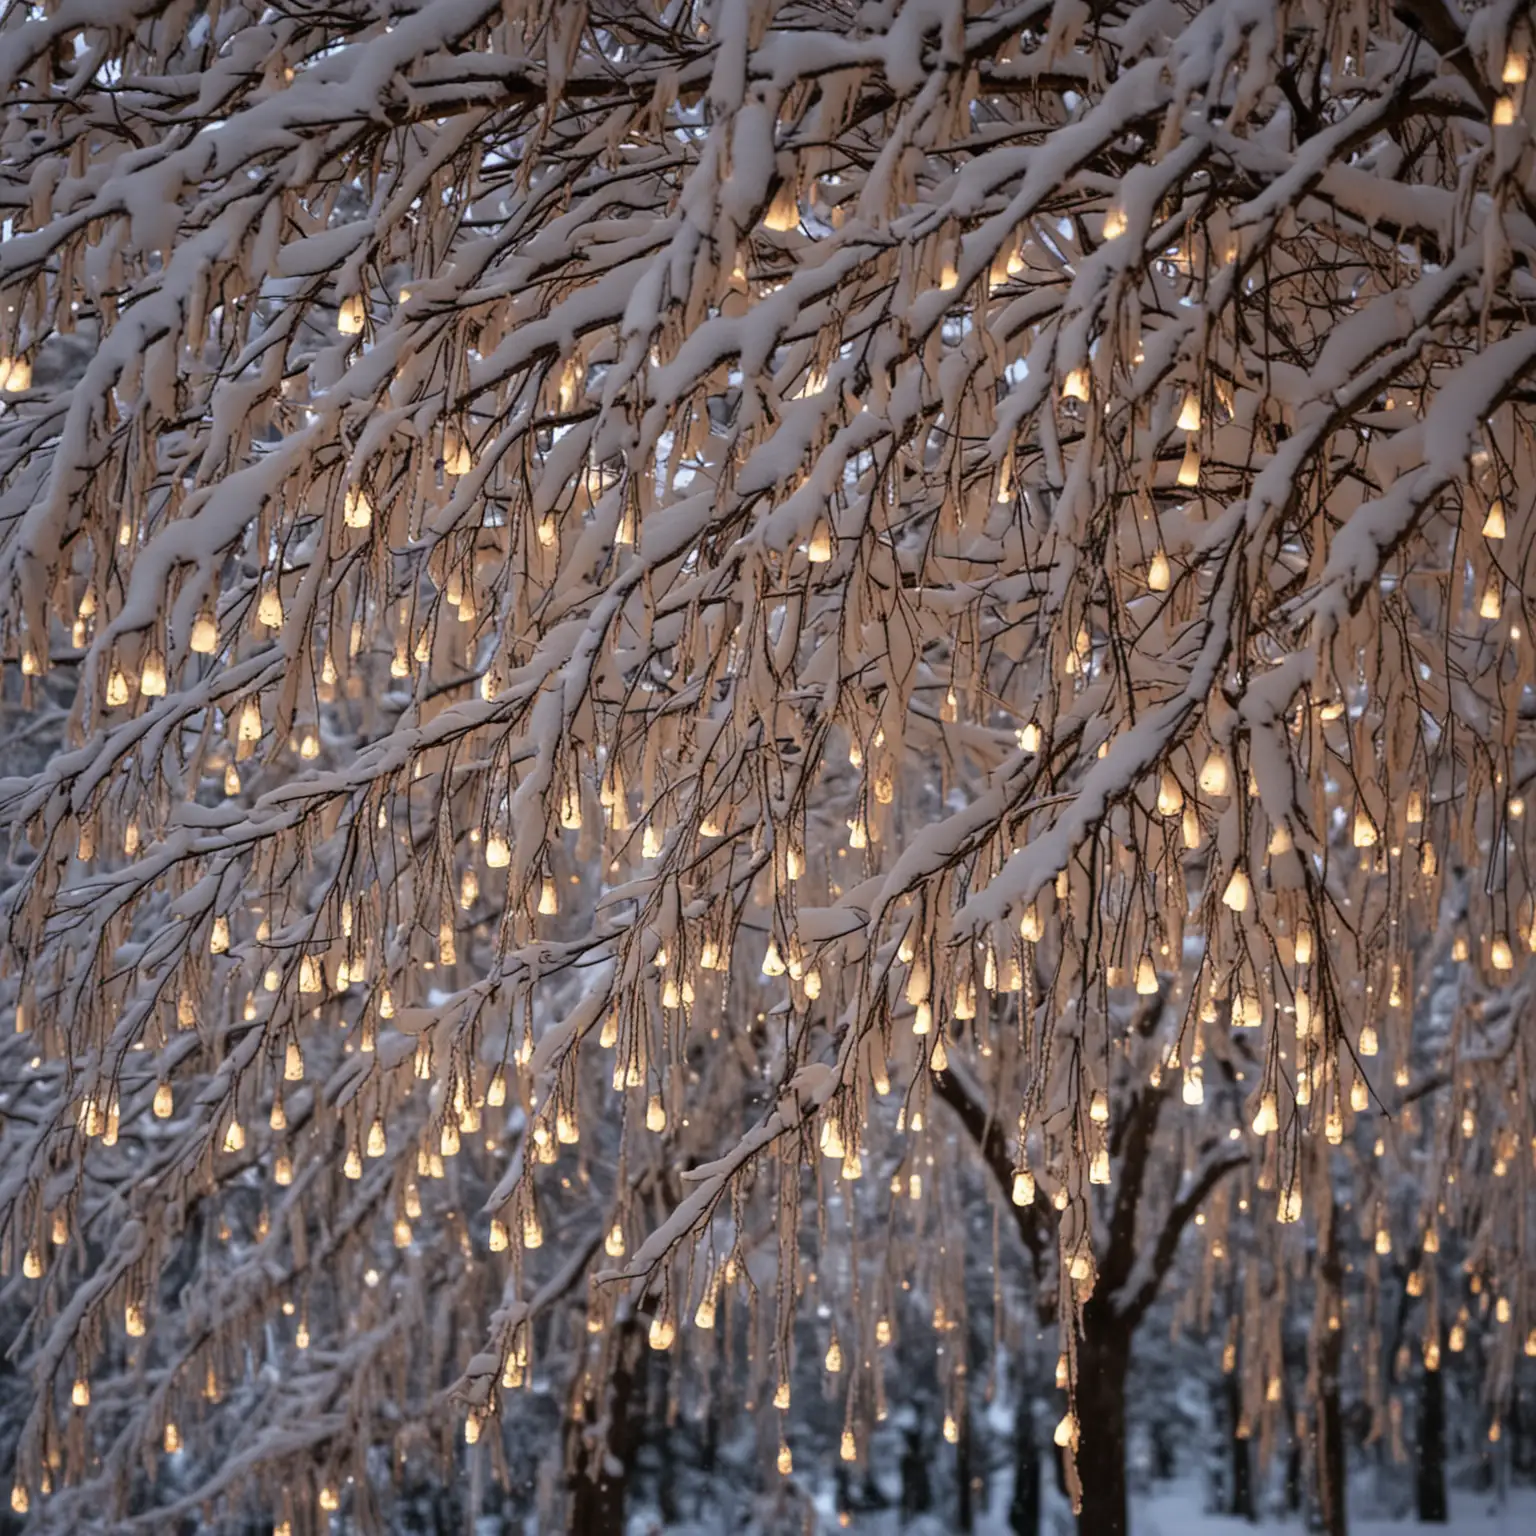 Winter Snowy Tree with Illuminated Lights Close Up